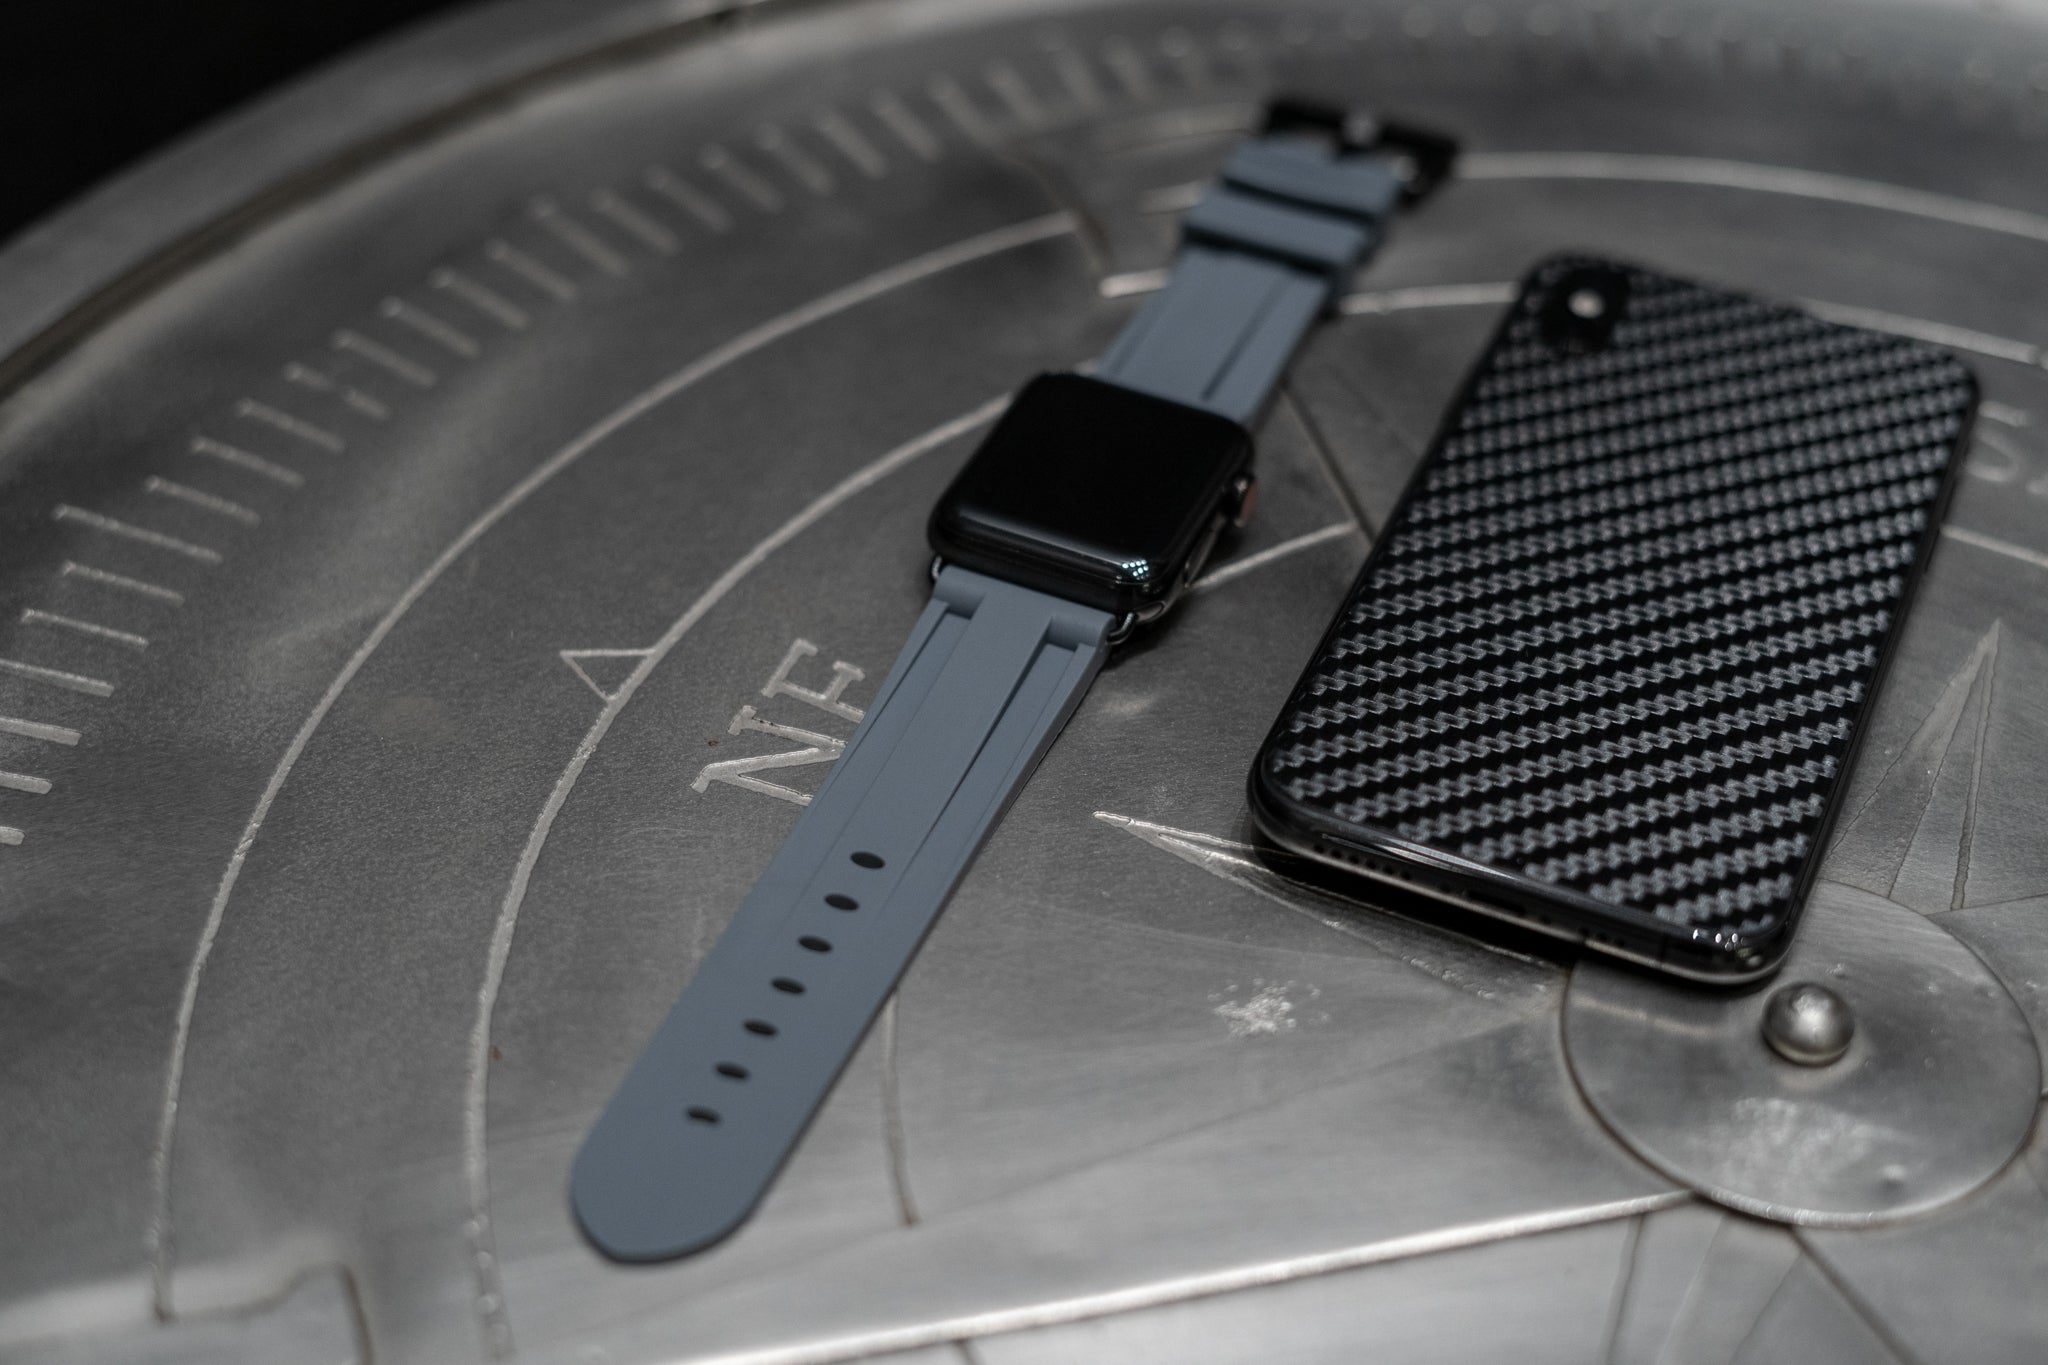 Grey Rubber Apple Watch Strap - Apple Watch Strap - Le Luxe Straps